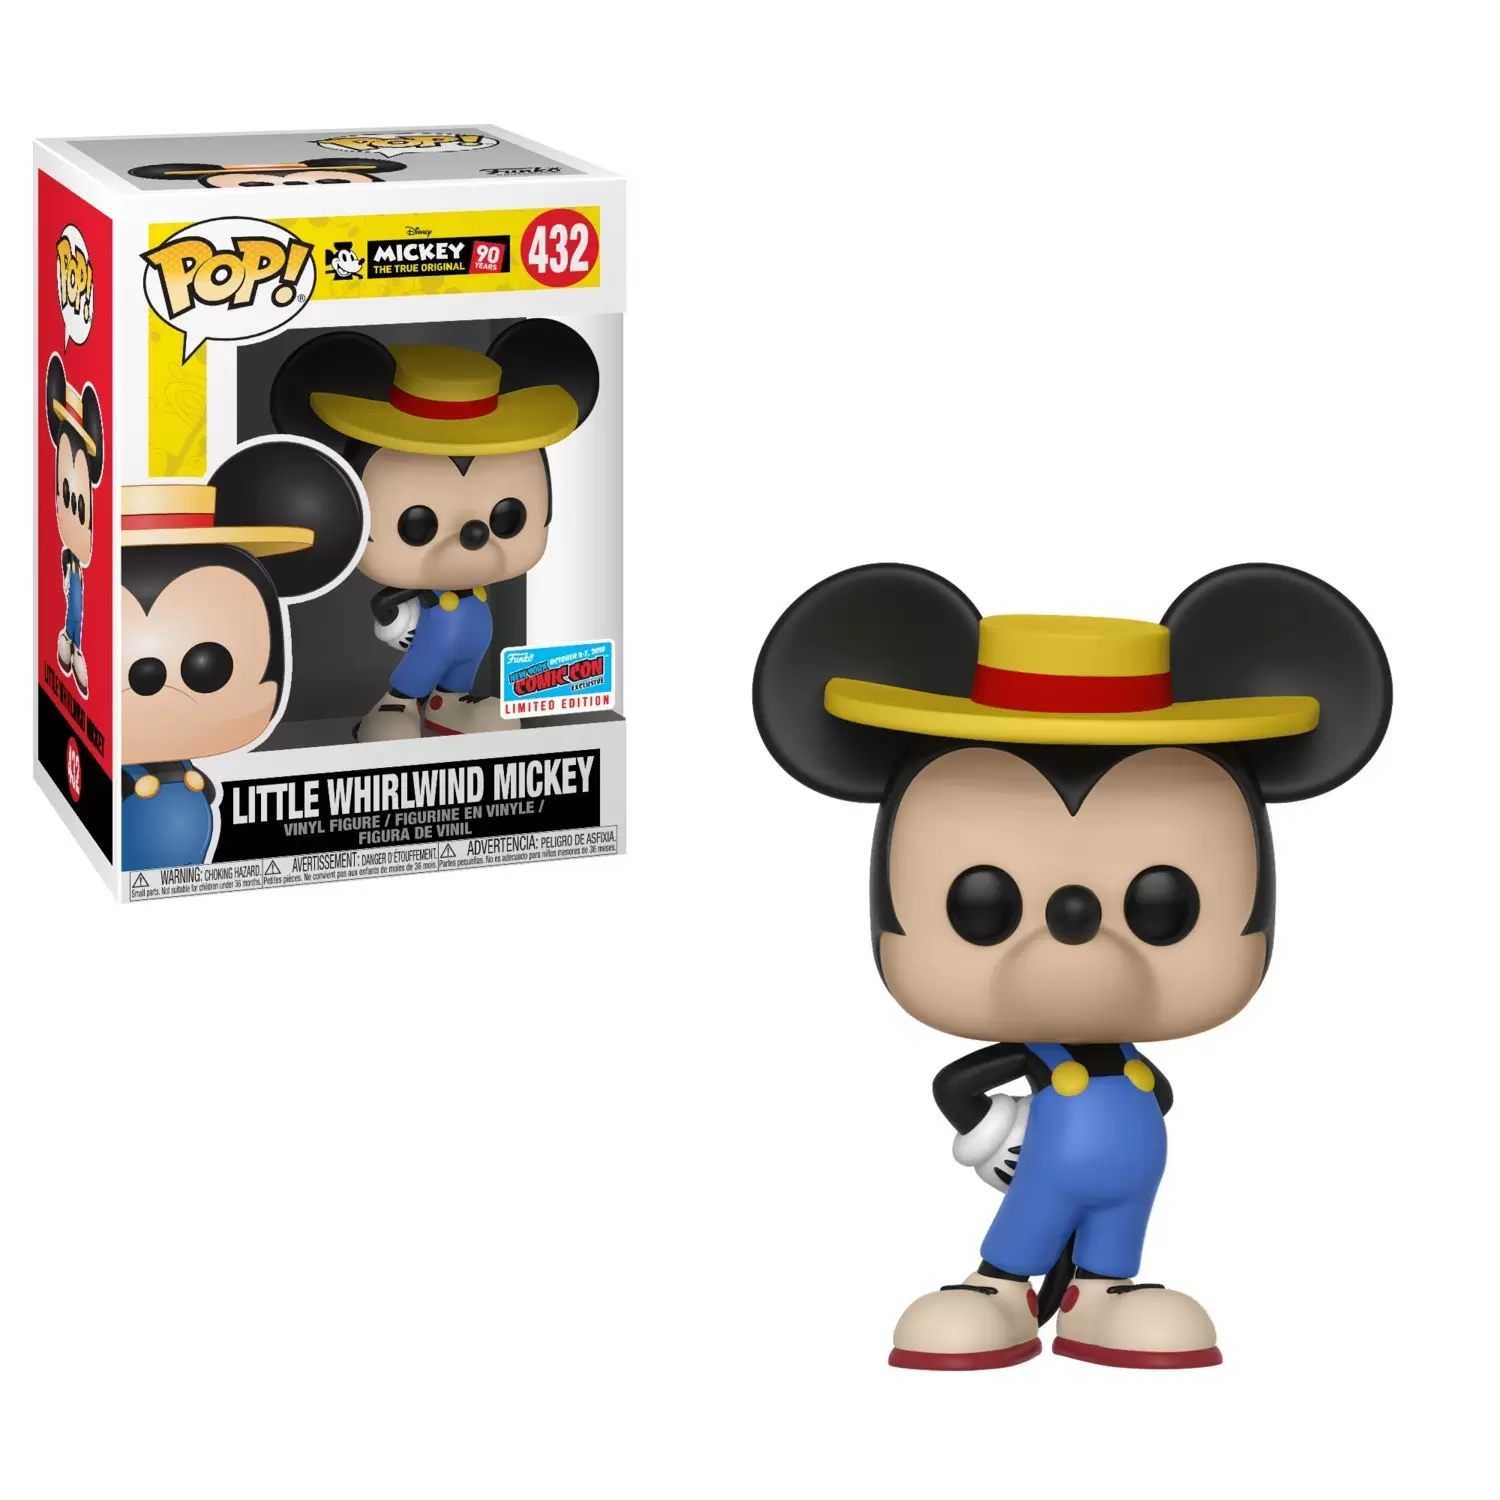 POP! Disney - Mickey 90th Anniversary - Little Whirlwind Mickey